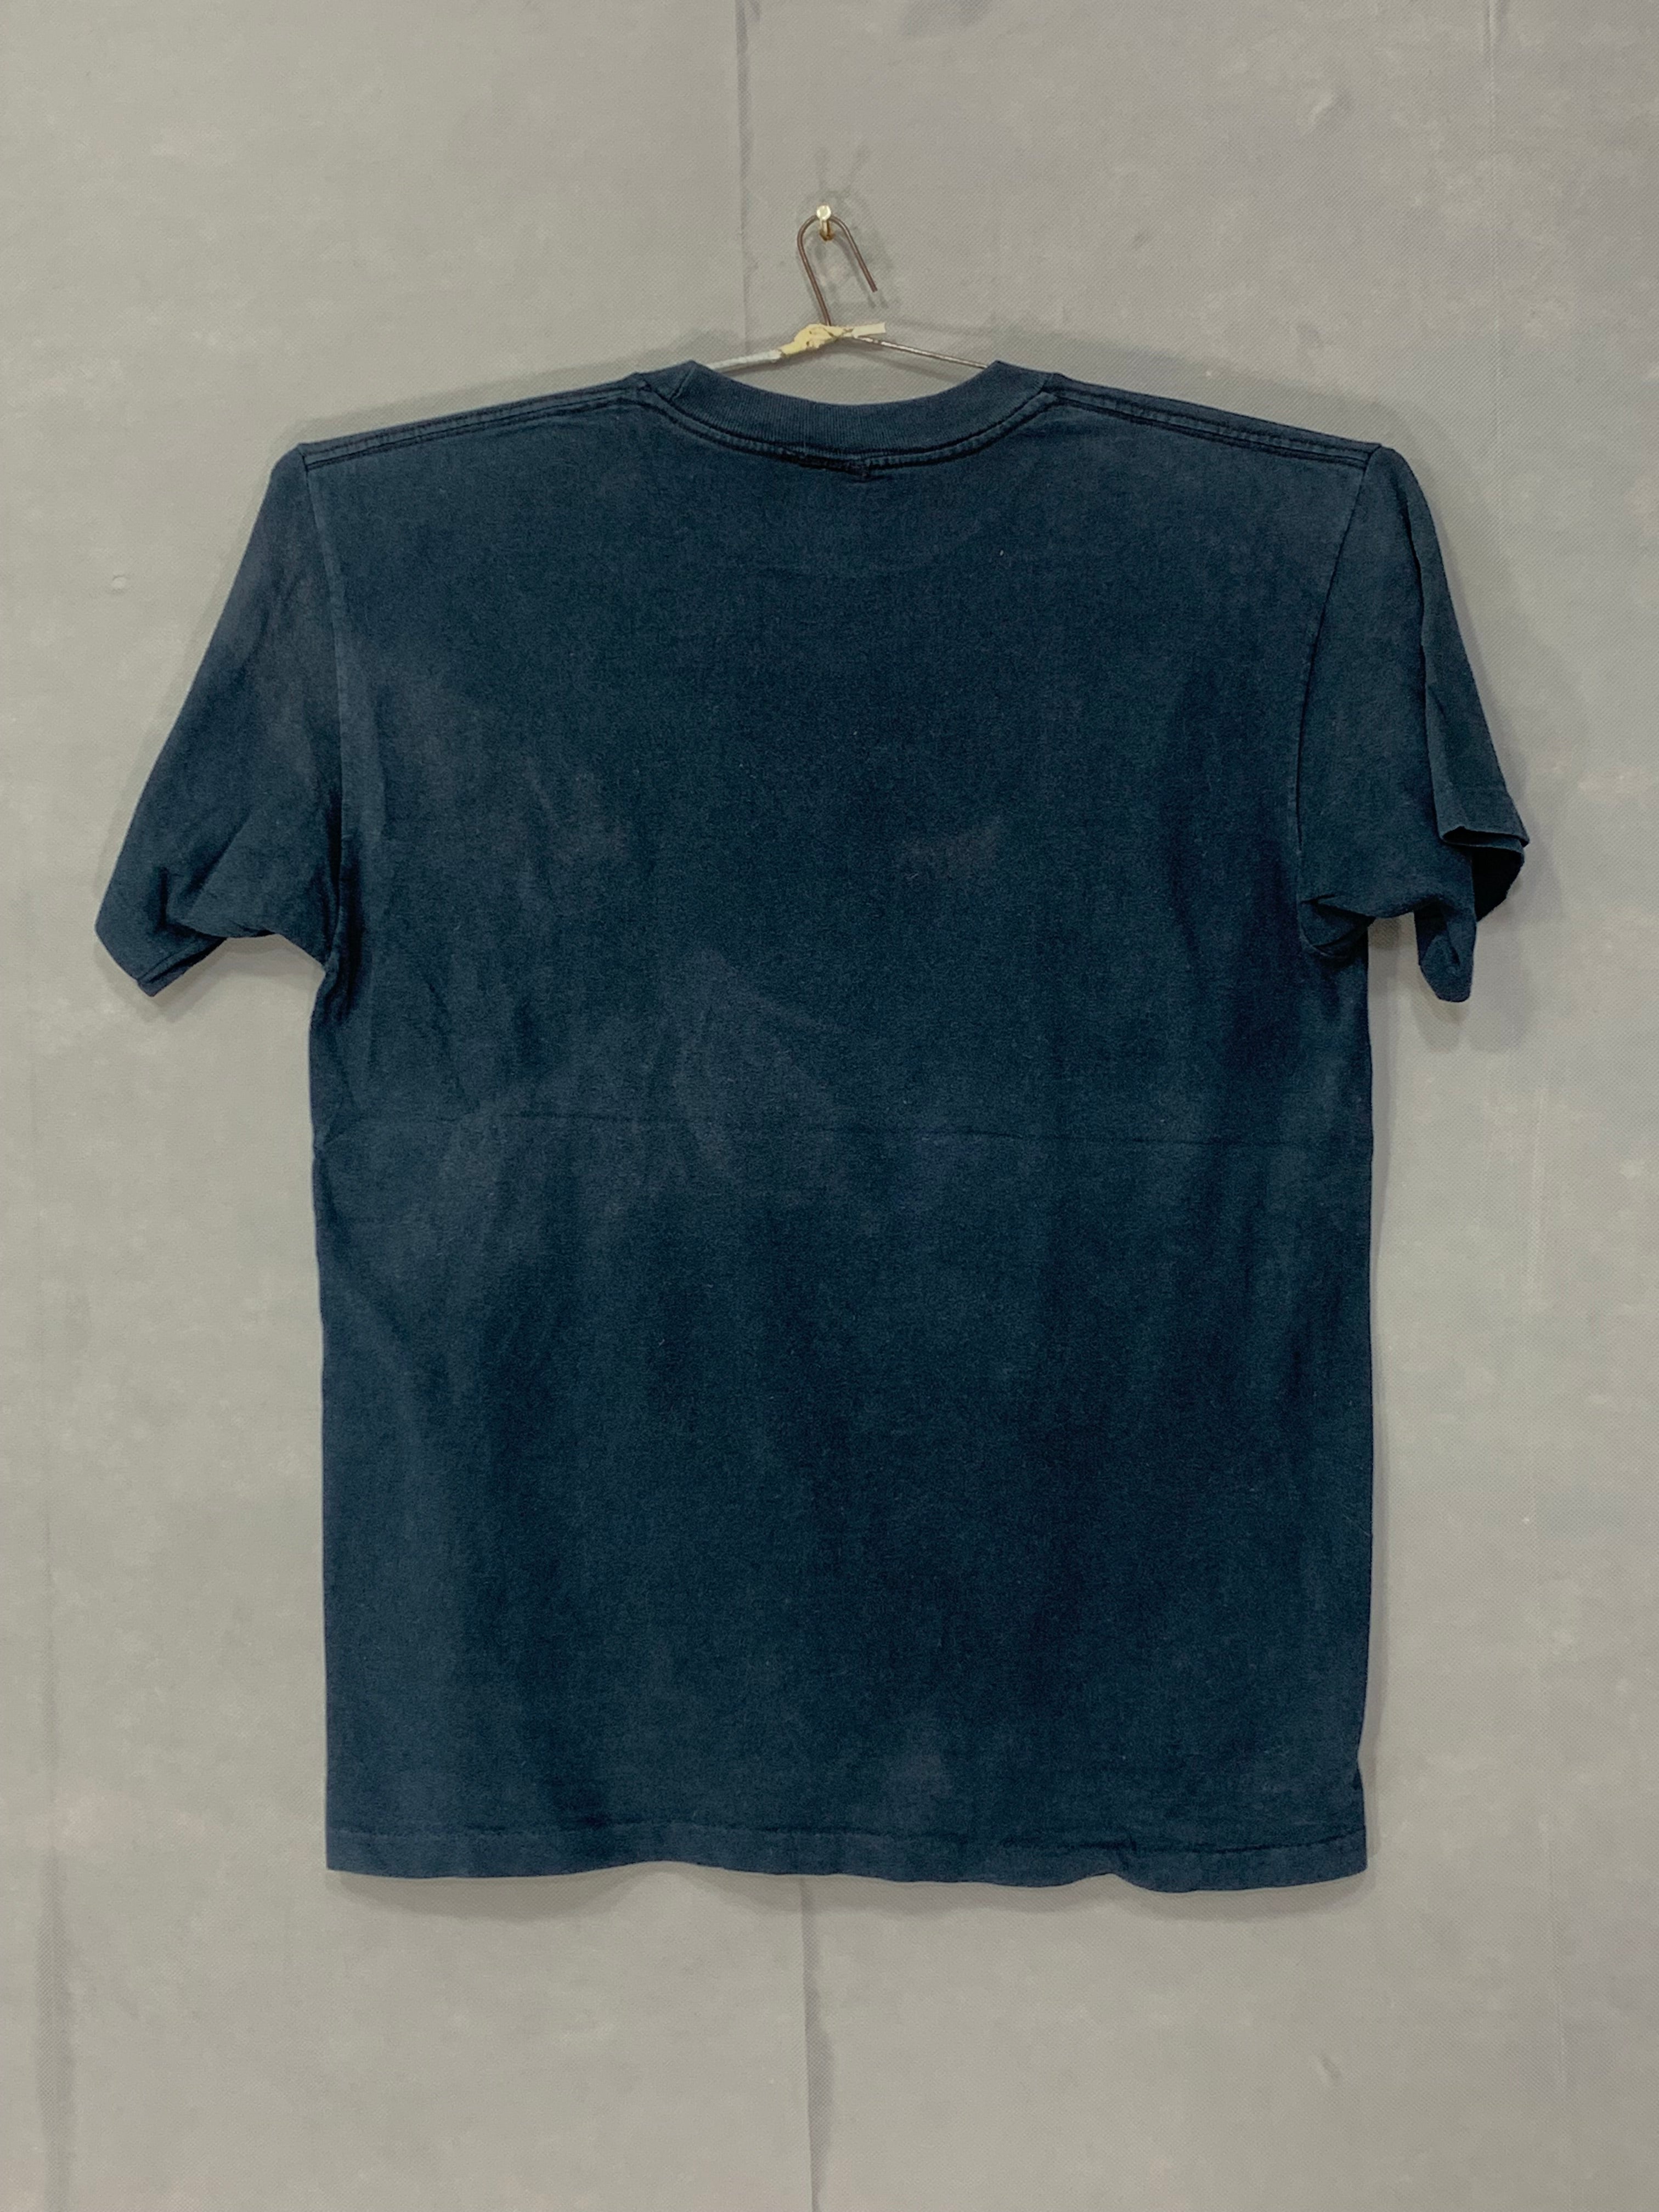 Rain Forest Cafe Branded Original Cotton T Shirt For Men